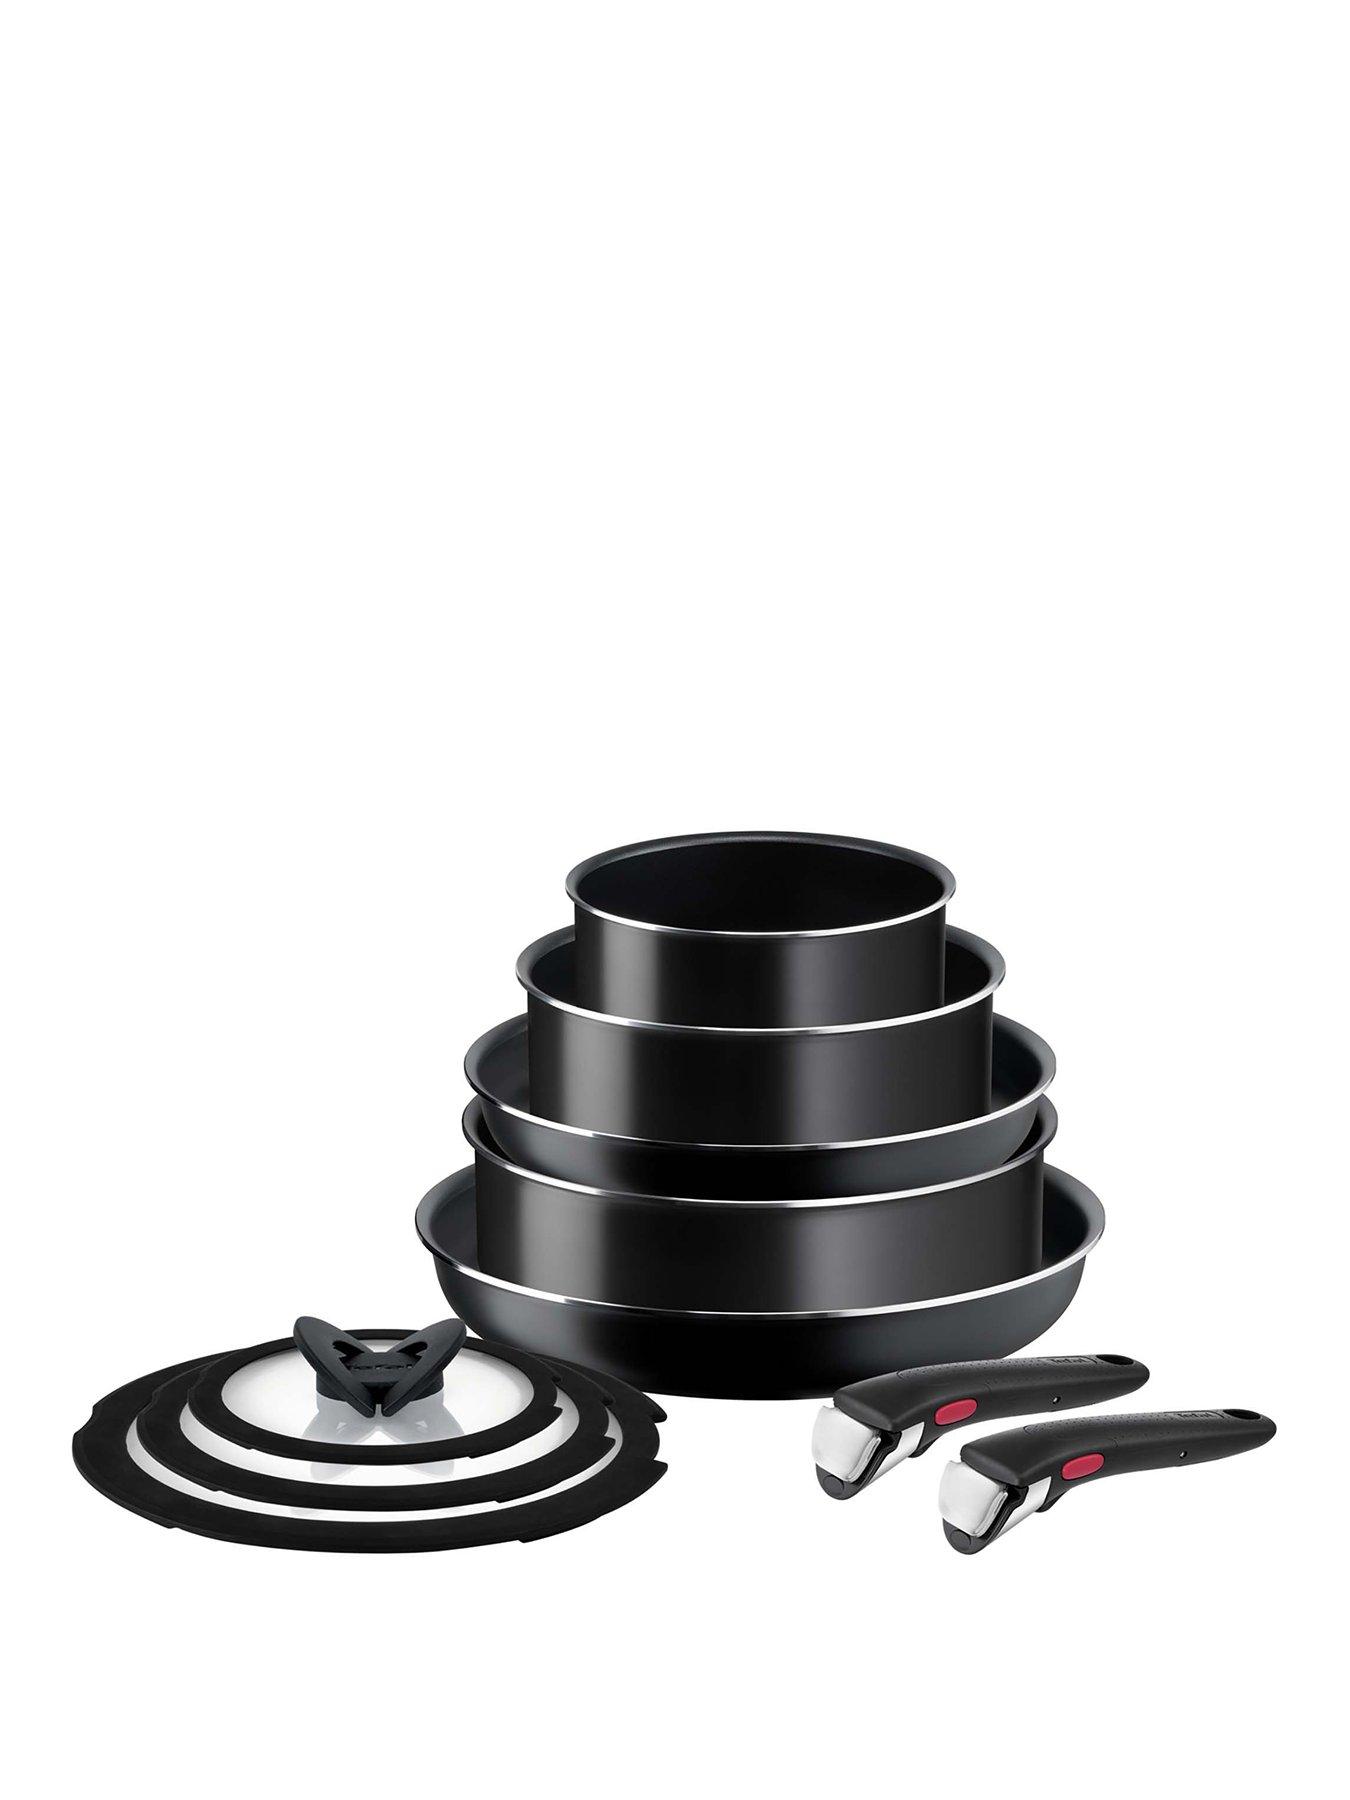 T-fal 14pc Ingenio Expertise Nonstick Cookware Set Black